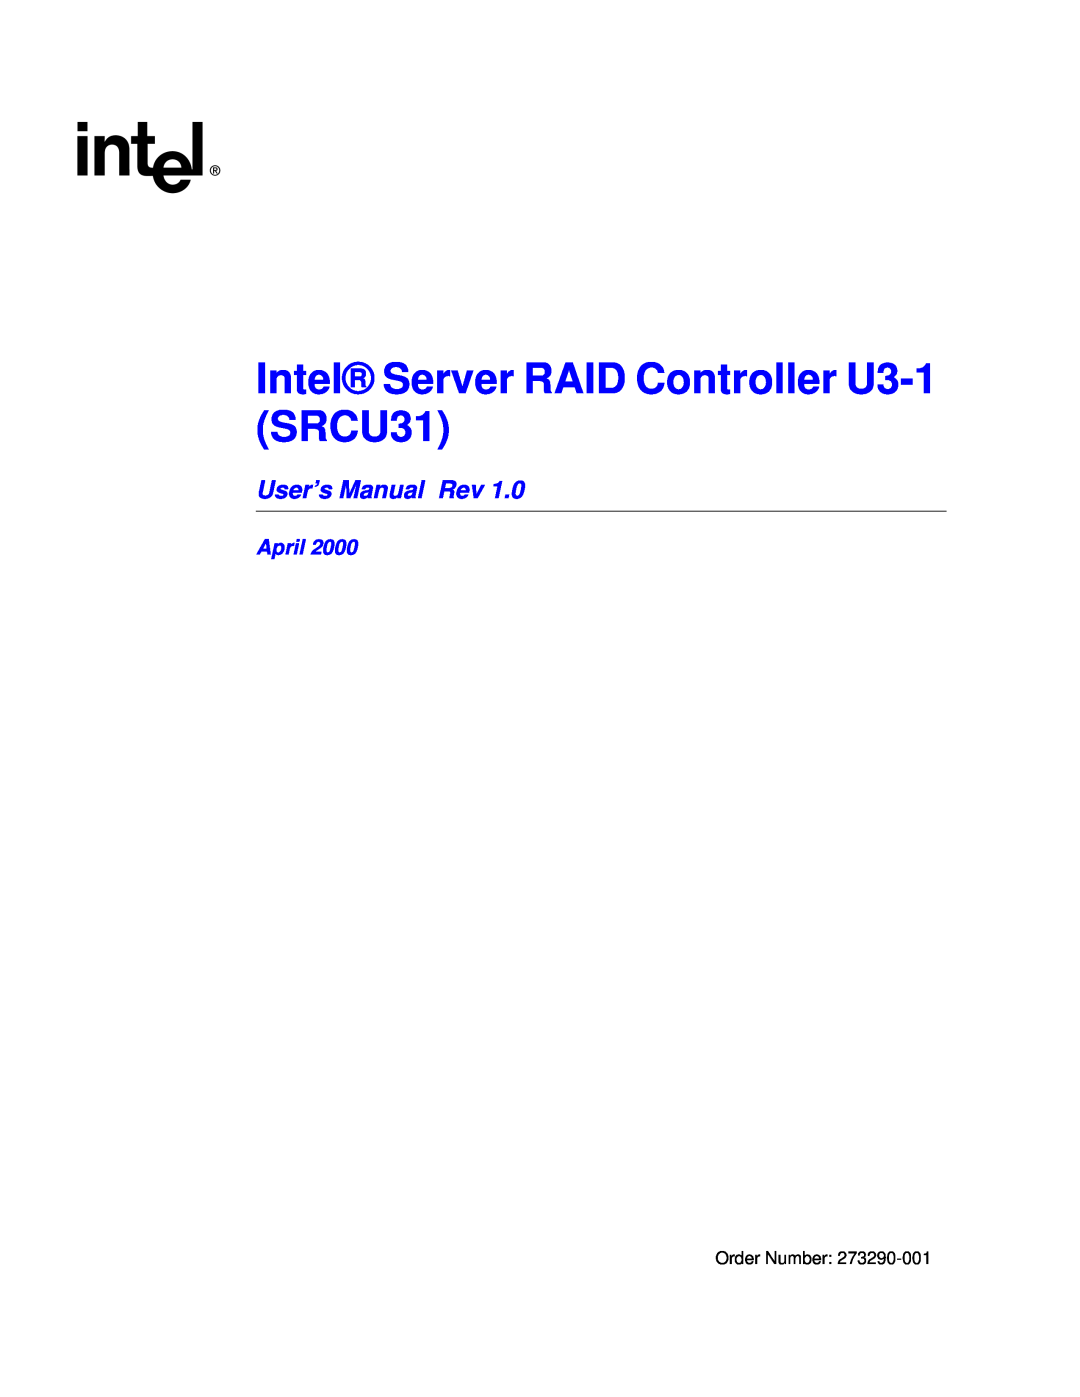 Intel user manual Intel Server RAID Controller U3-1SRCU31, User’s Manual Rev, April 